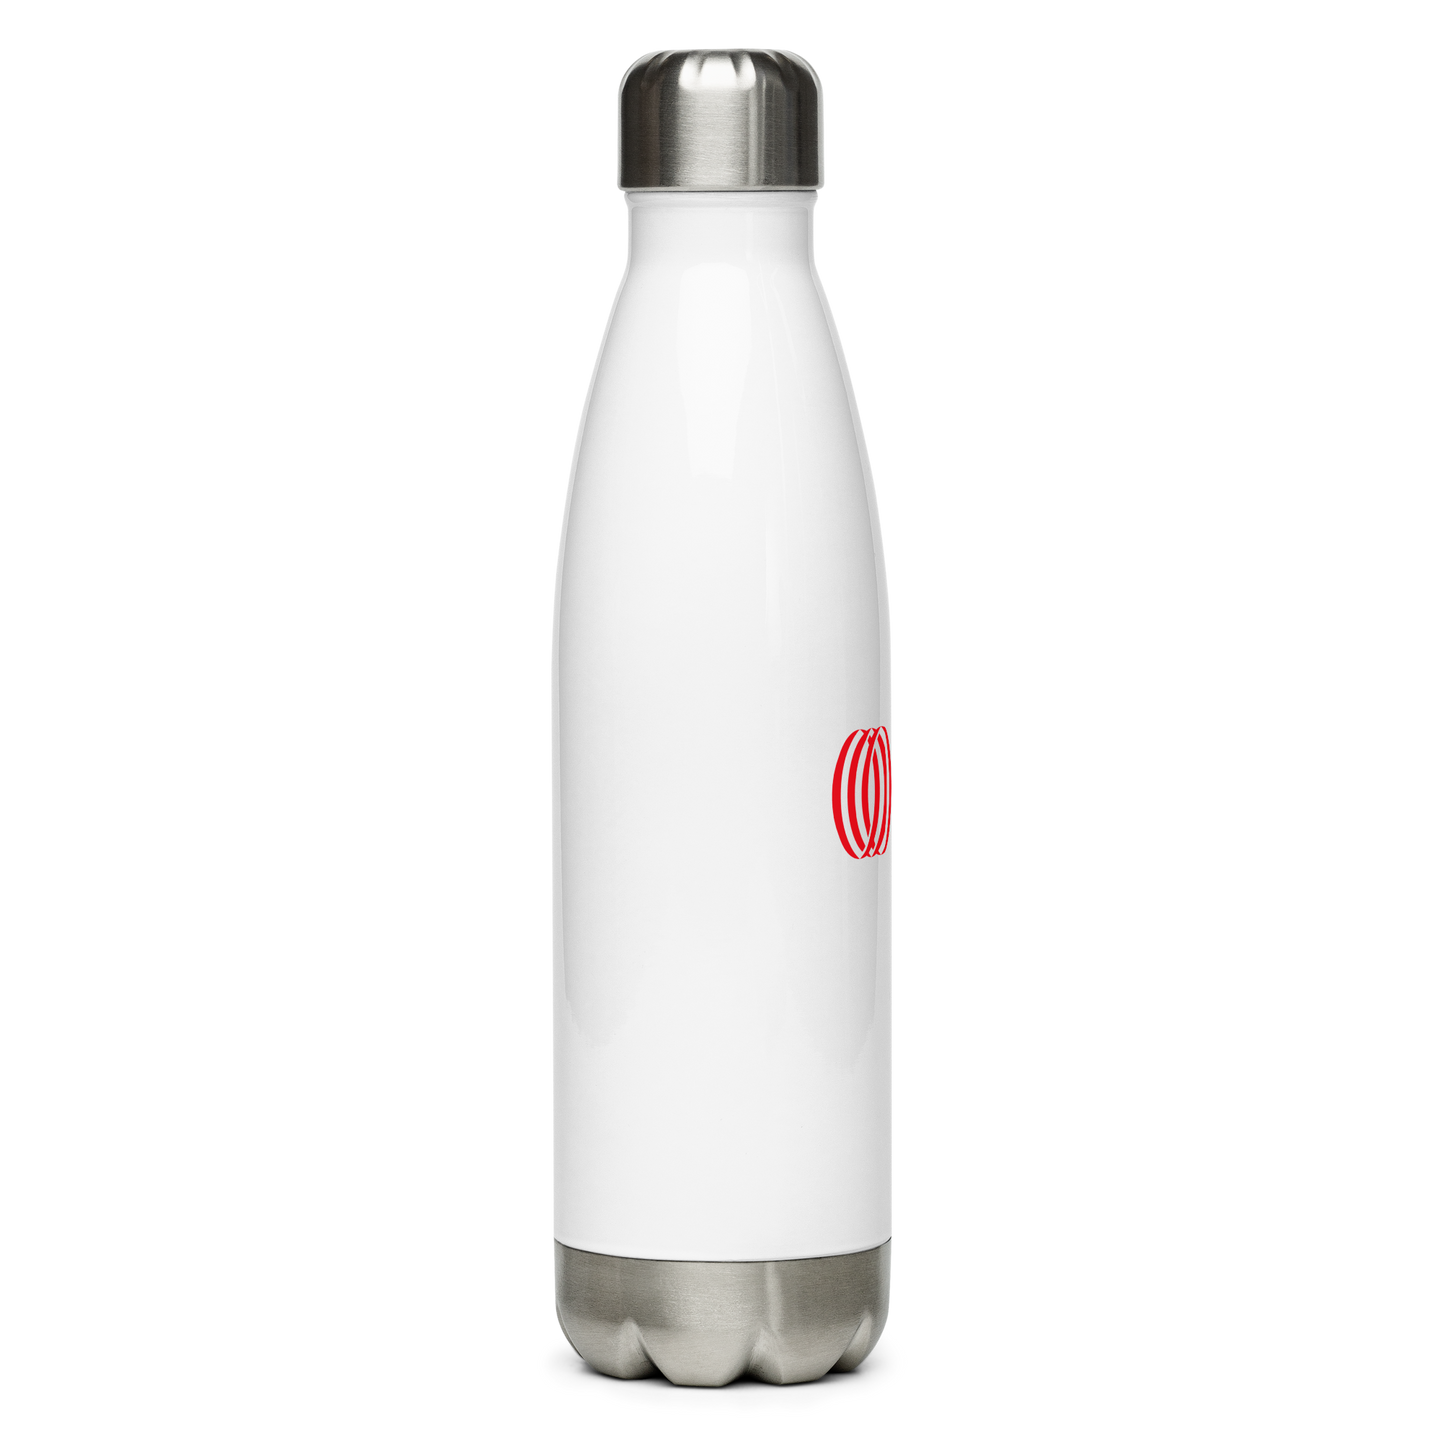 JLL Stainless steel water bottle